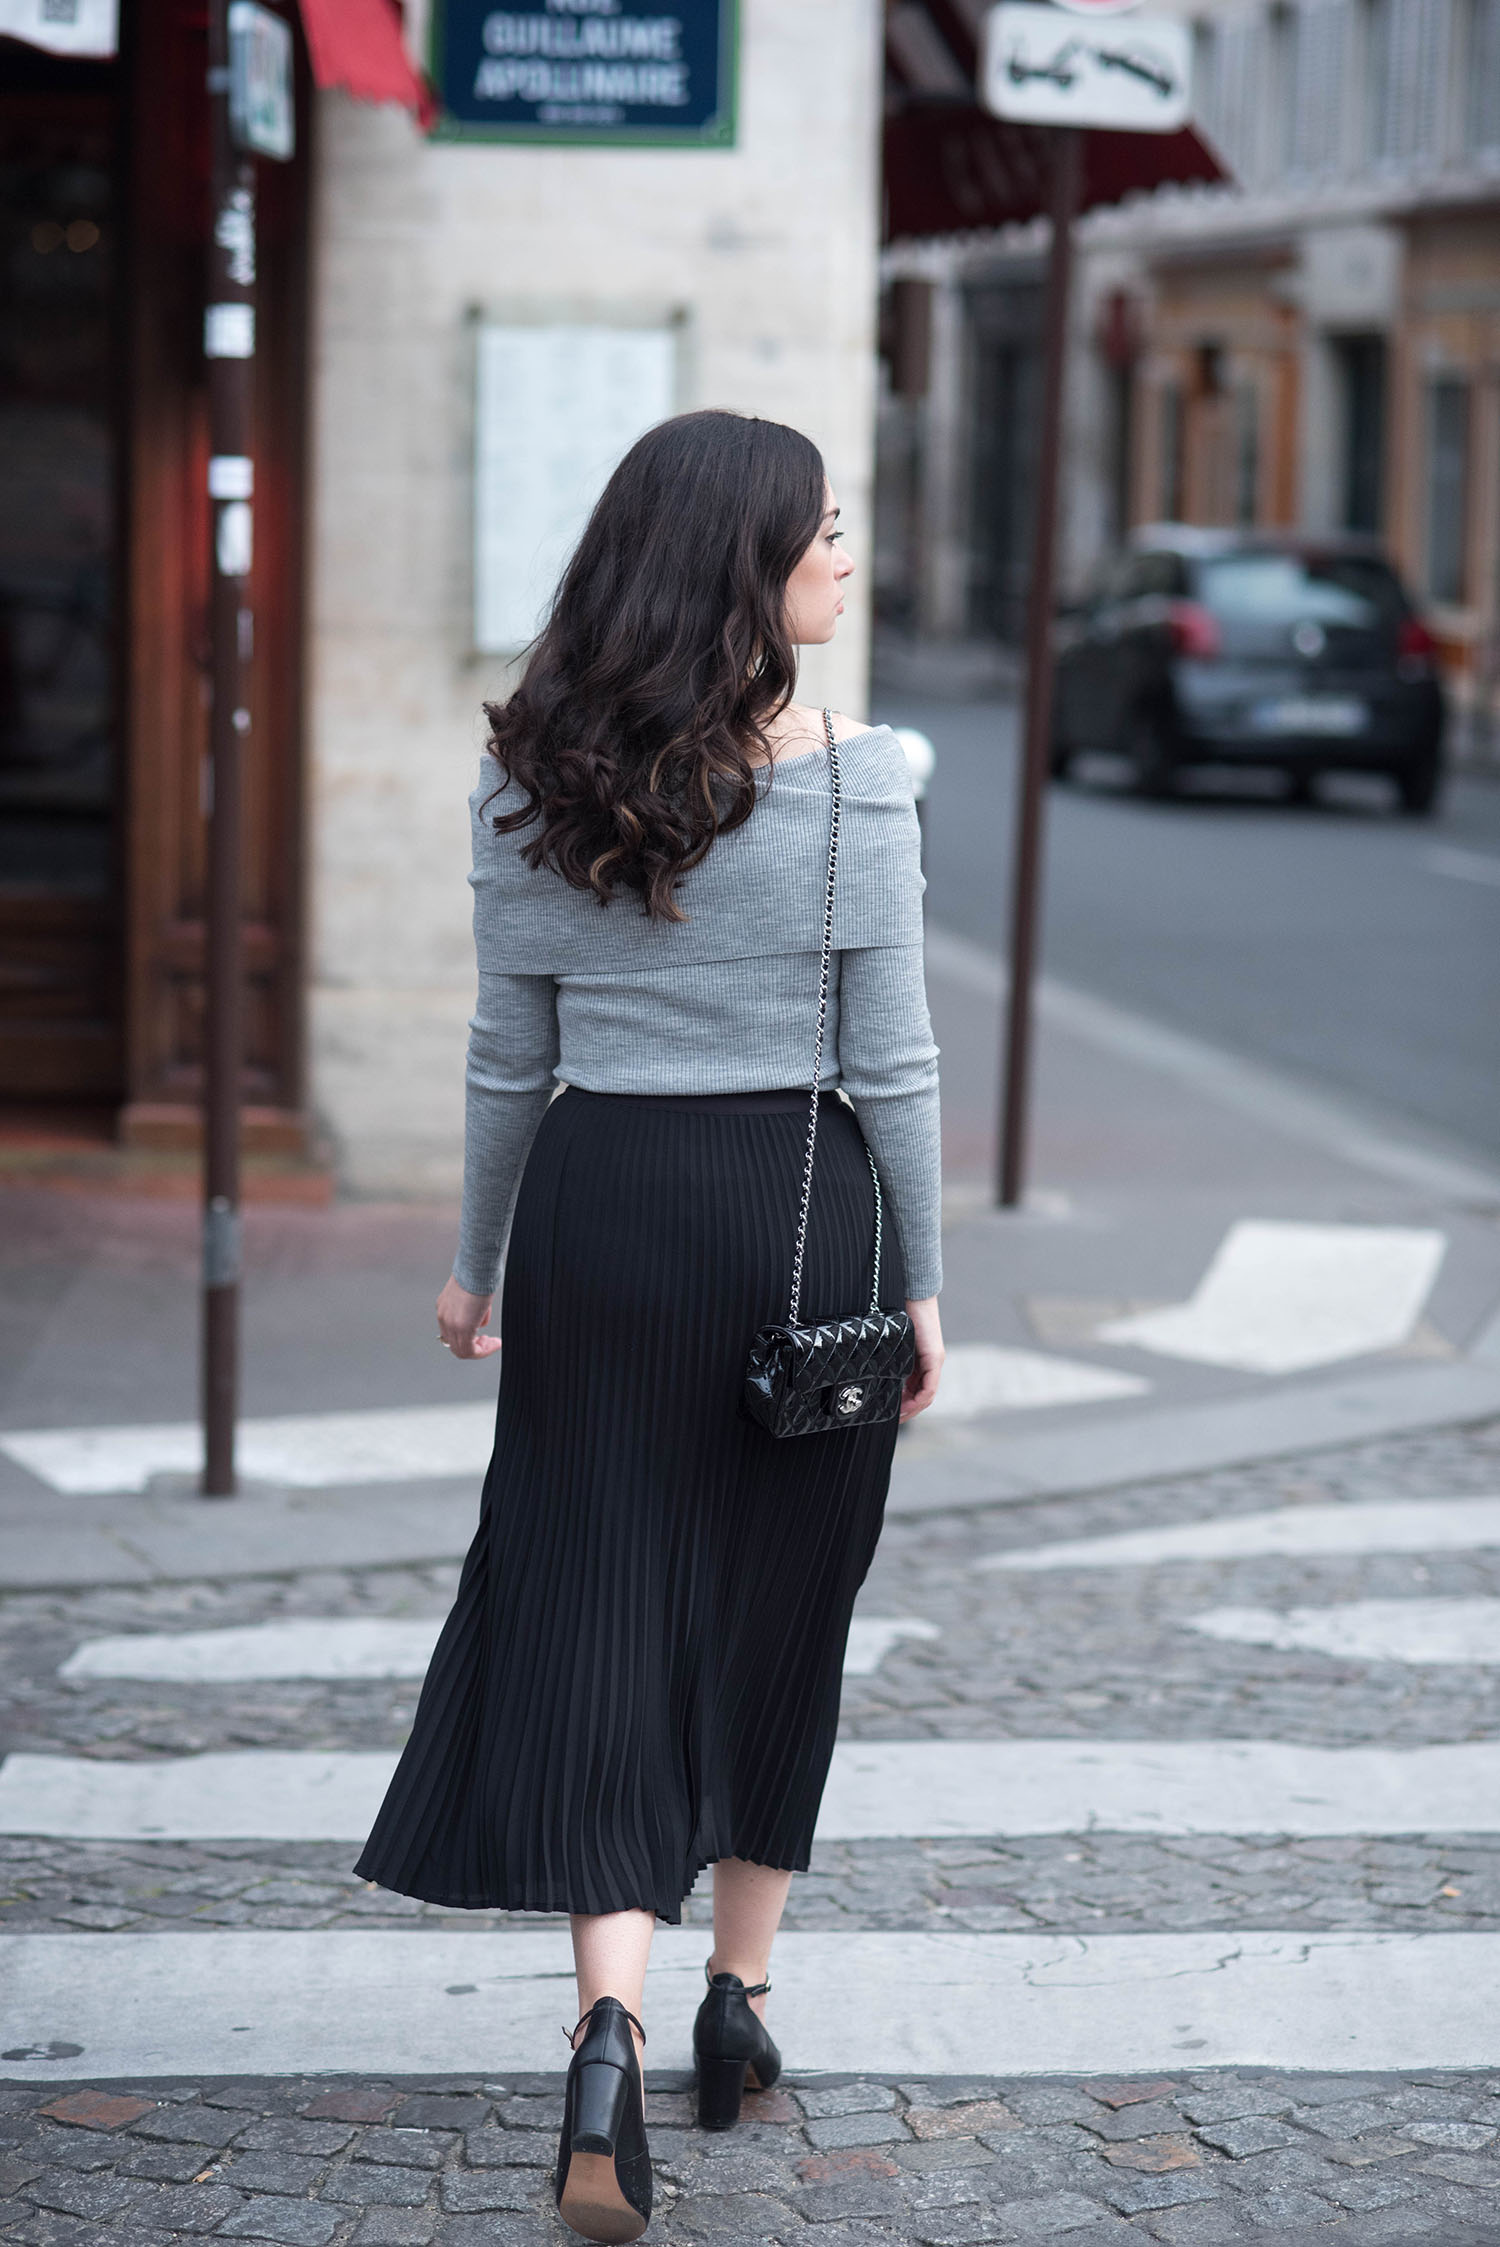 Fashion blogger Cee Fardoe of Coco & Vera walking in Paris wearing an Aritzia pleated skirt and Chanel handbag